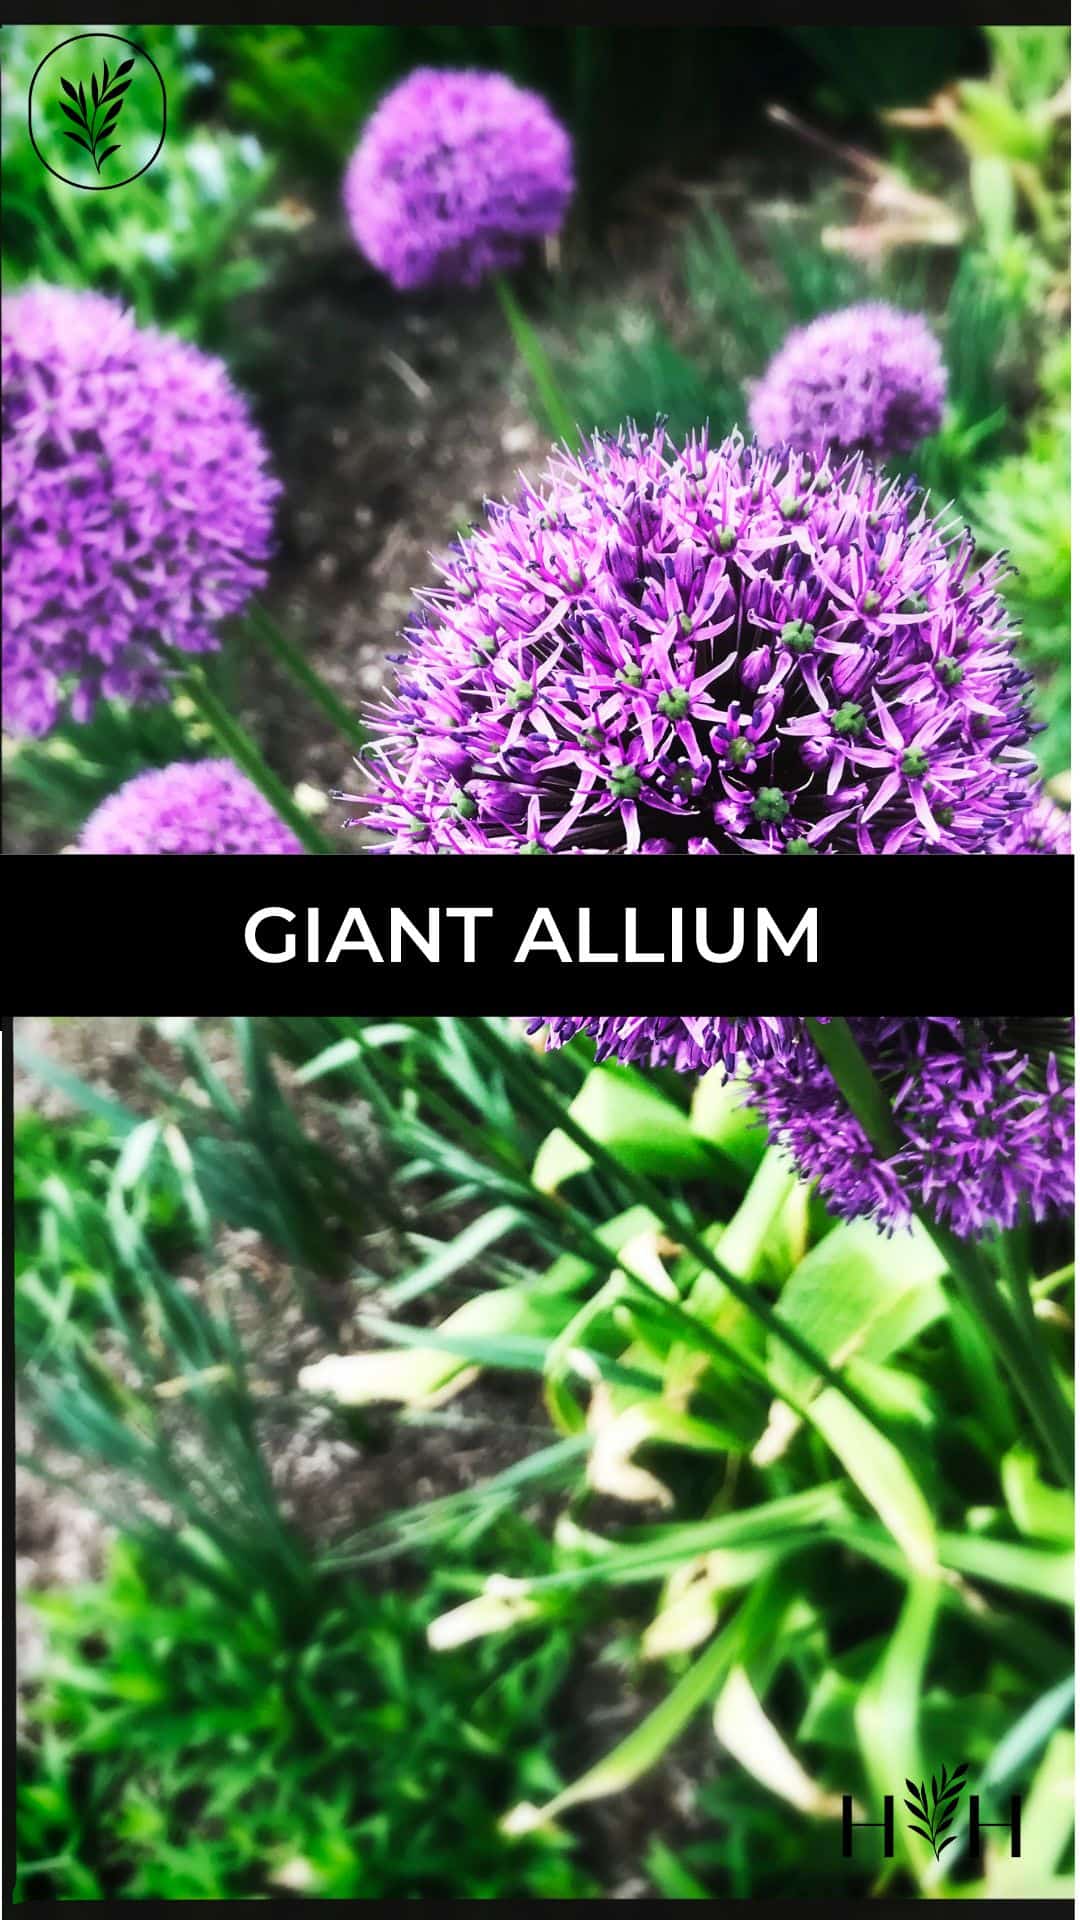 Giant allium via @home4theharvest